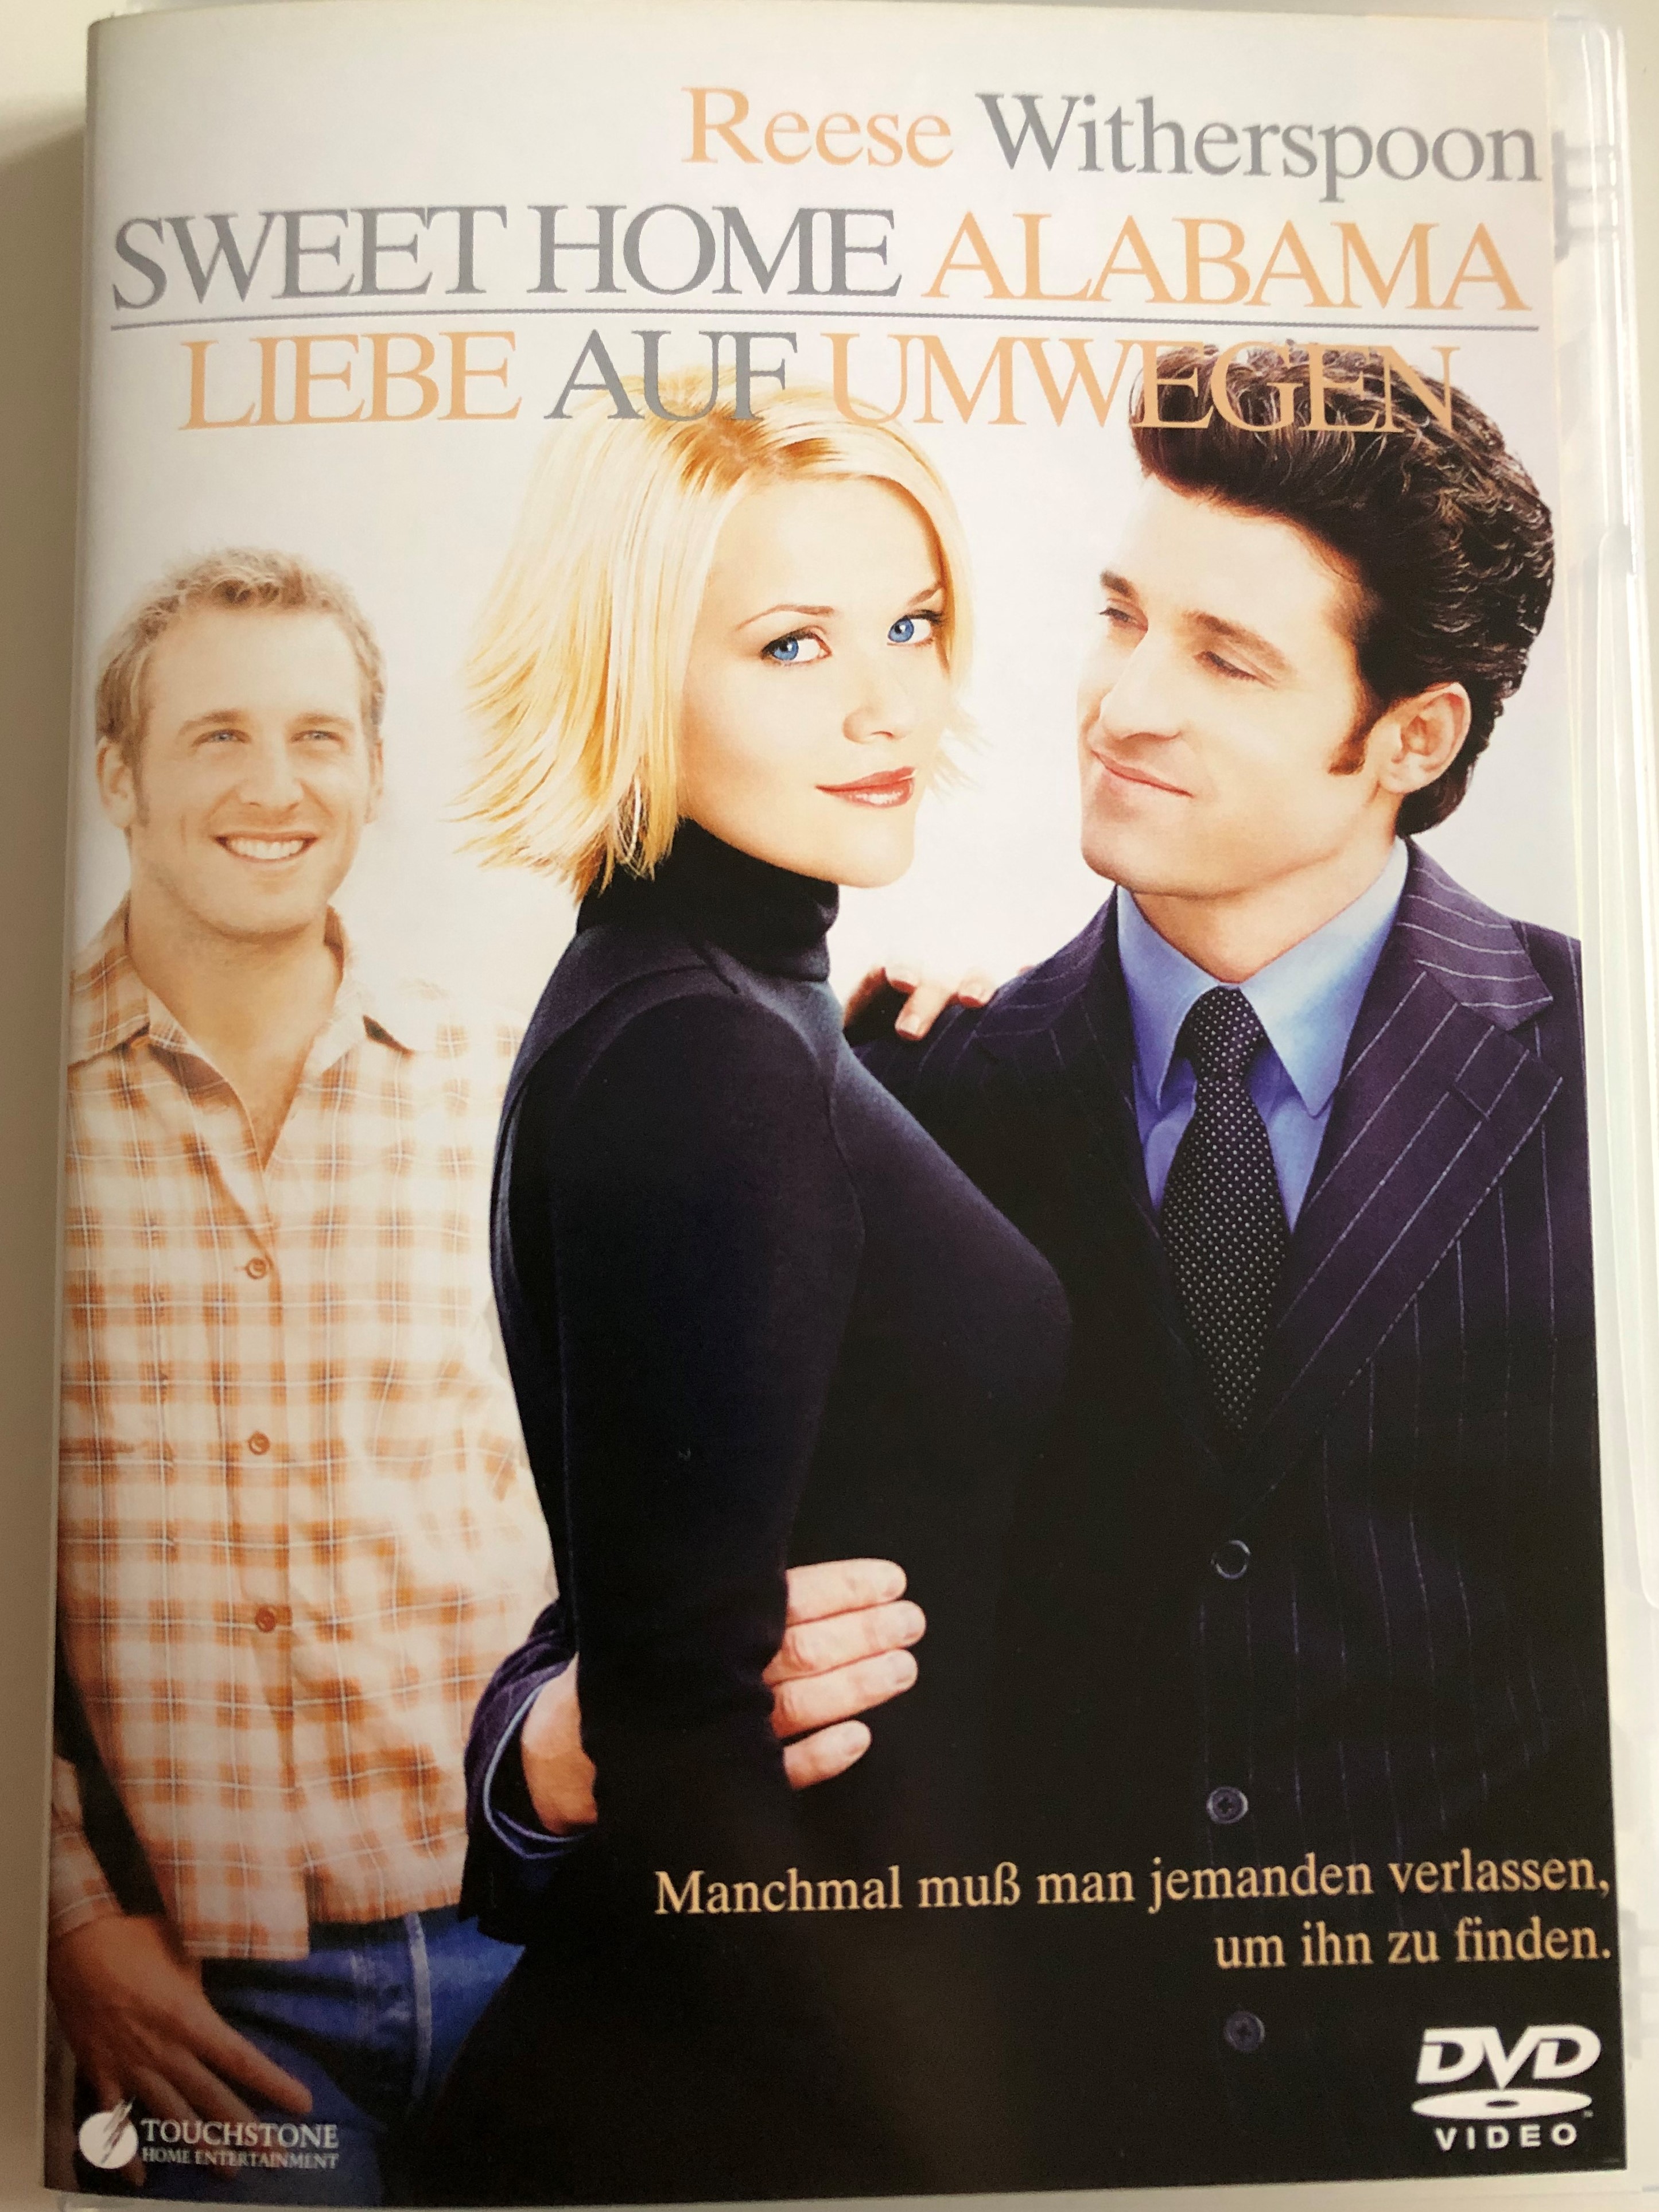 sweet-home-alabama-dvd-2002-liebe-auf-umwegen-1.jpg